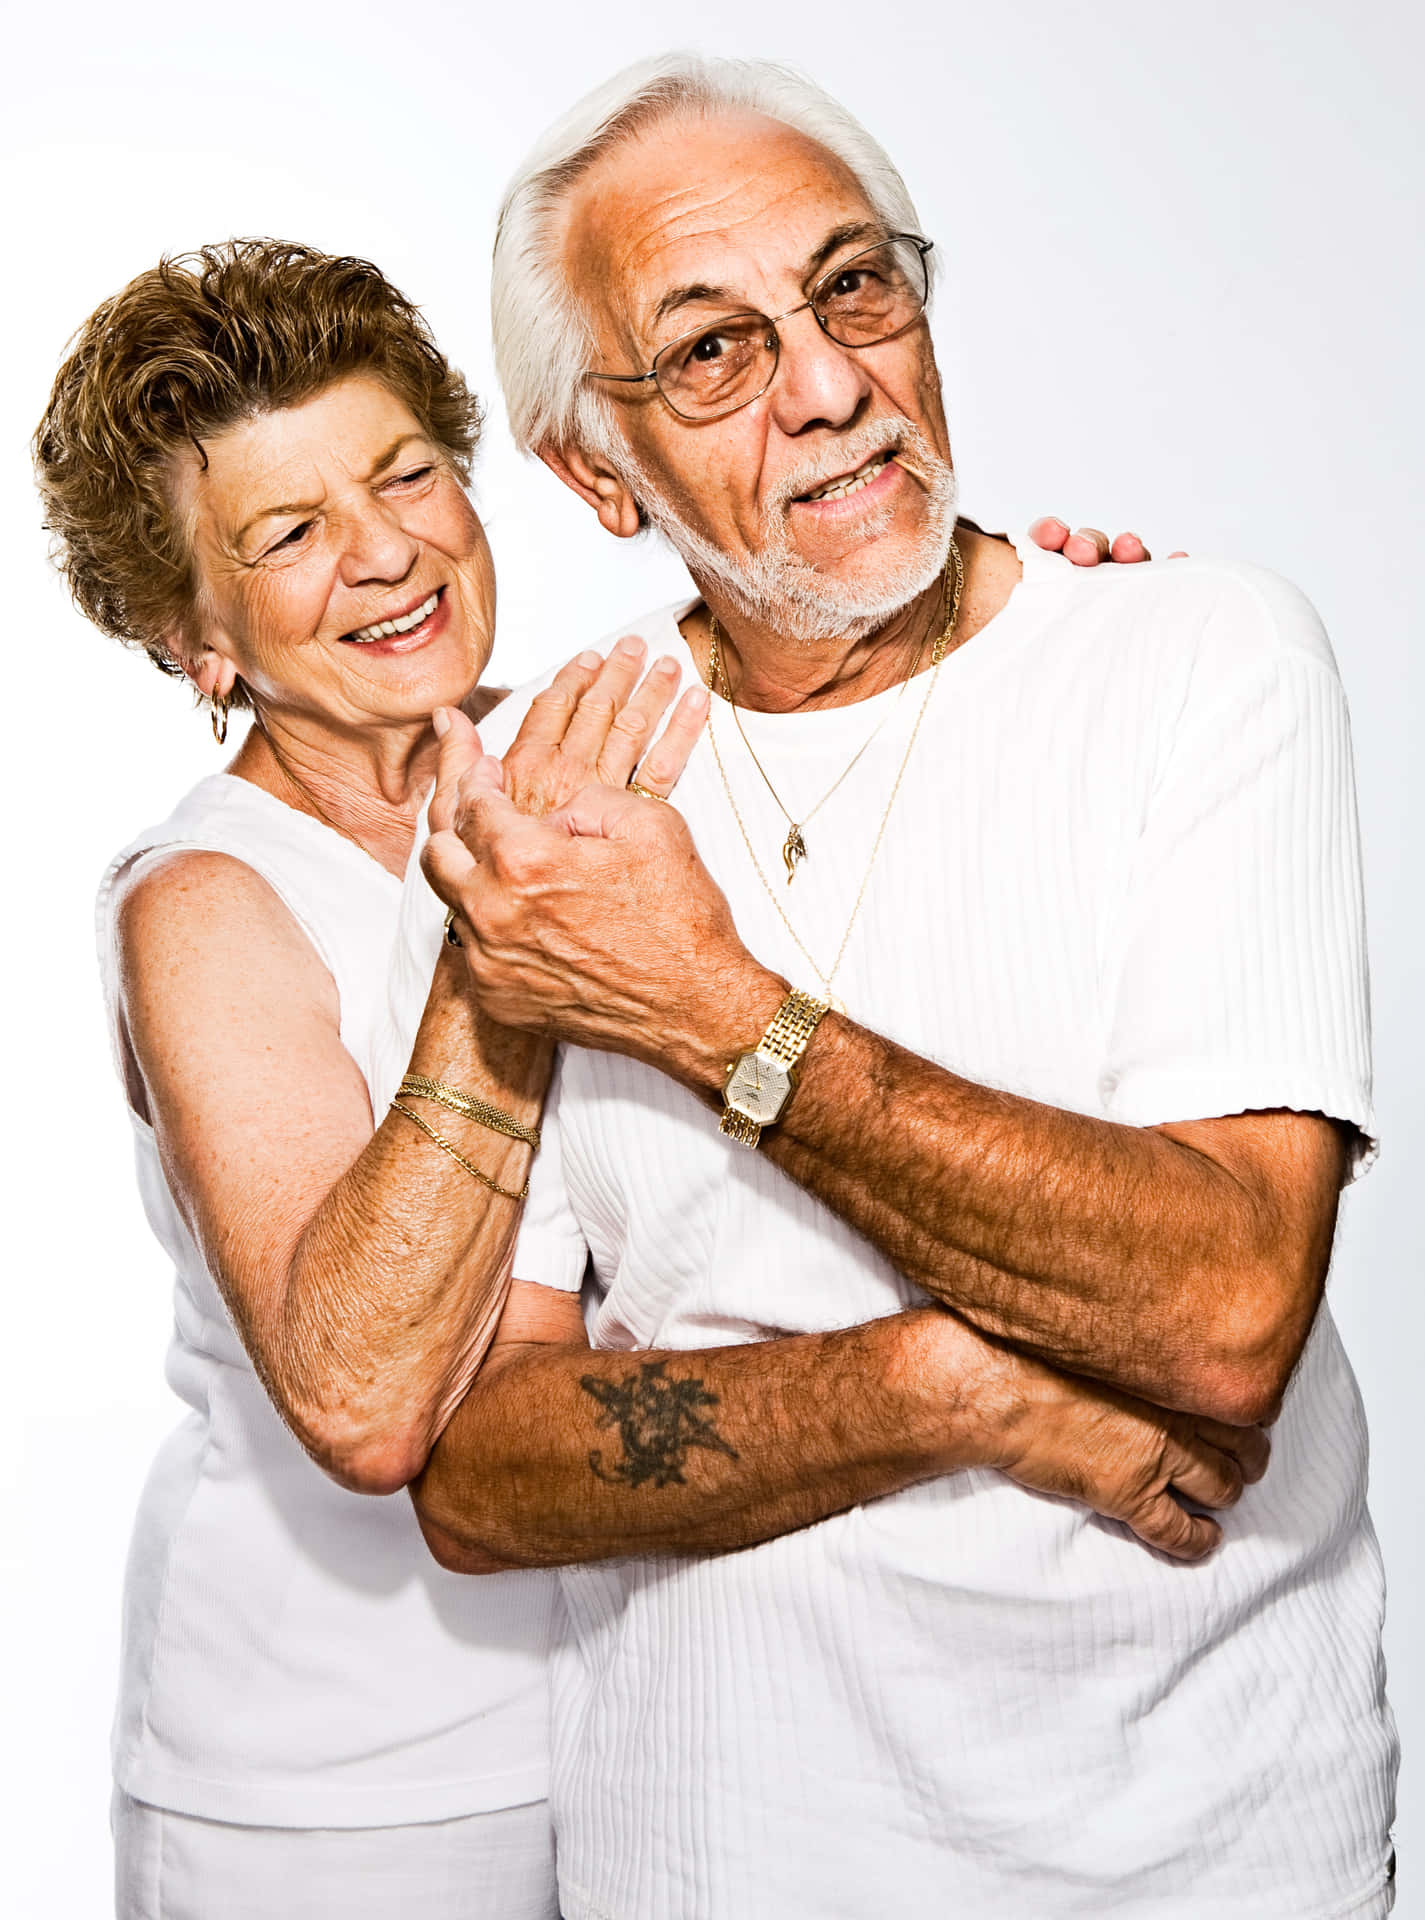 Portrait Of A Happy Mature Couple In White